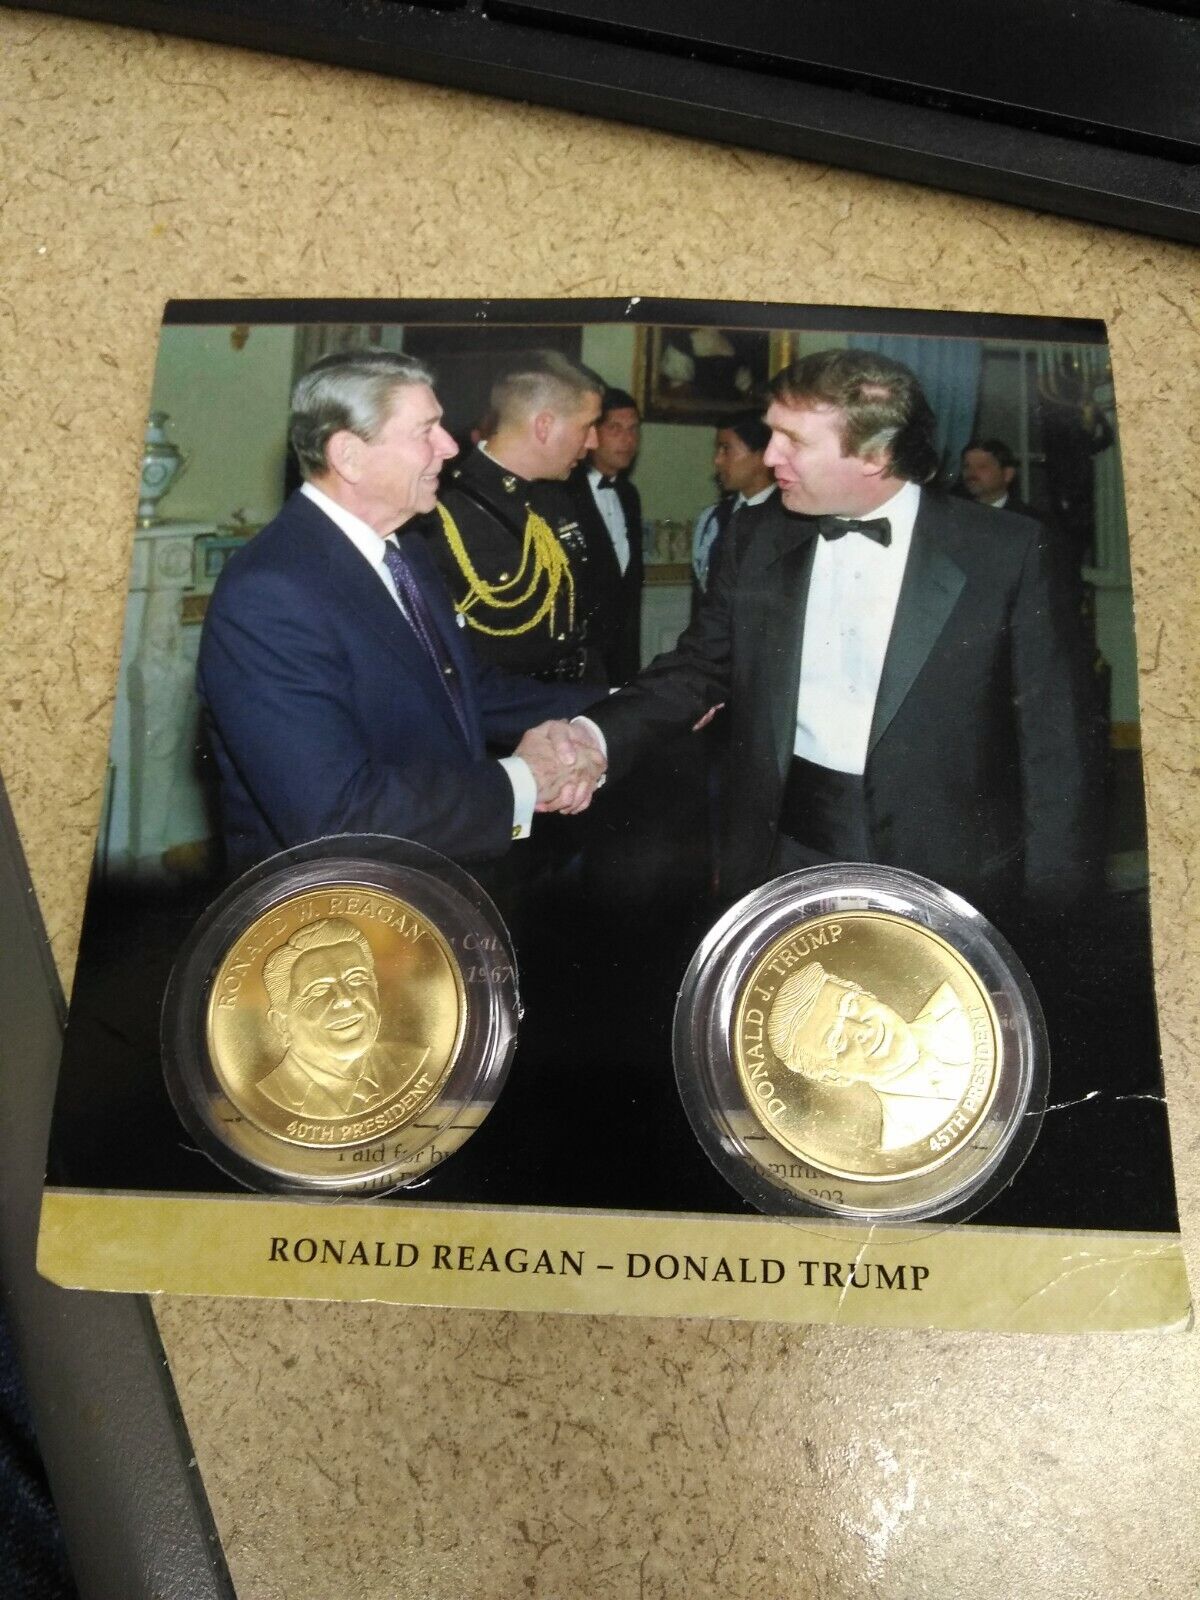 Ronald Reagan - Donald Trump RNC Limited Commemorative Coin Set New 2020